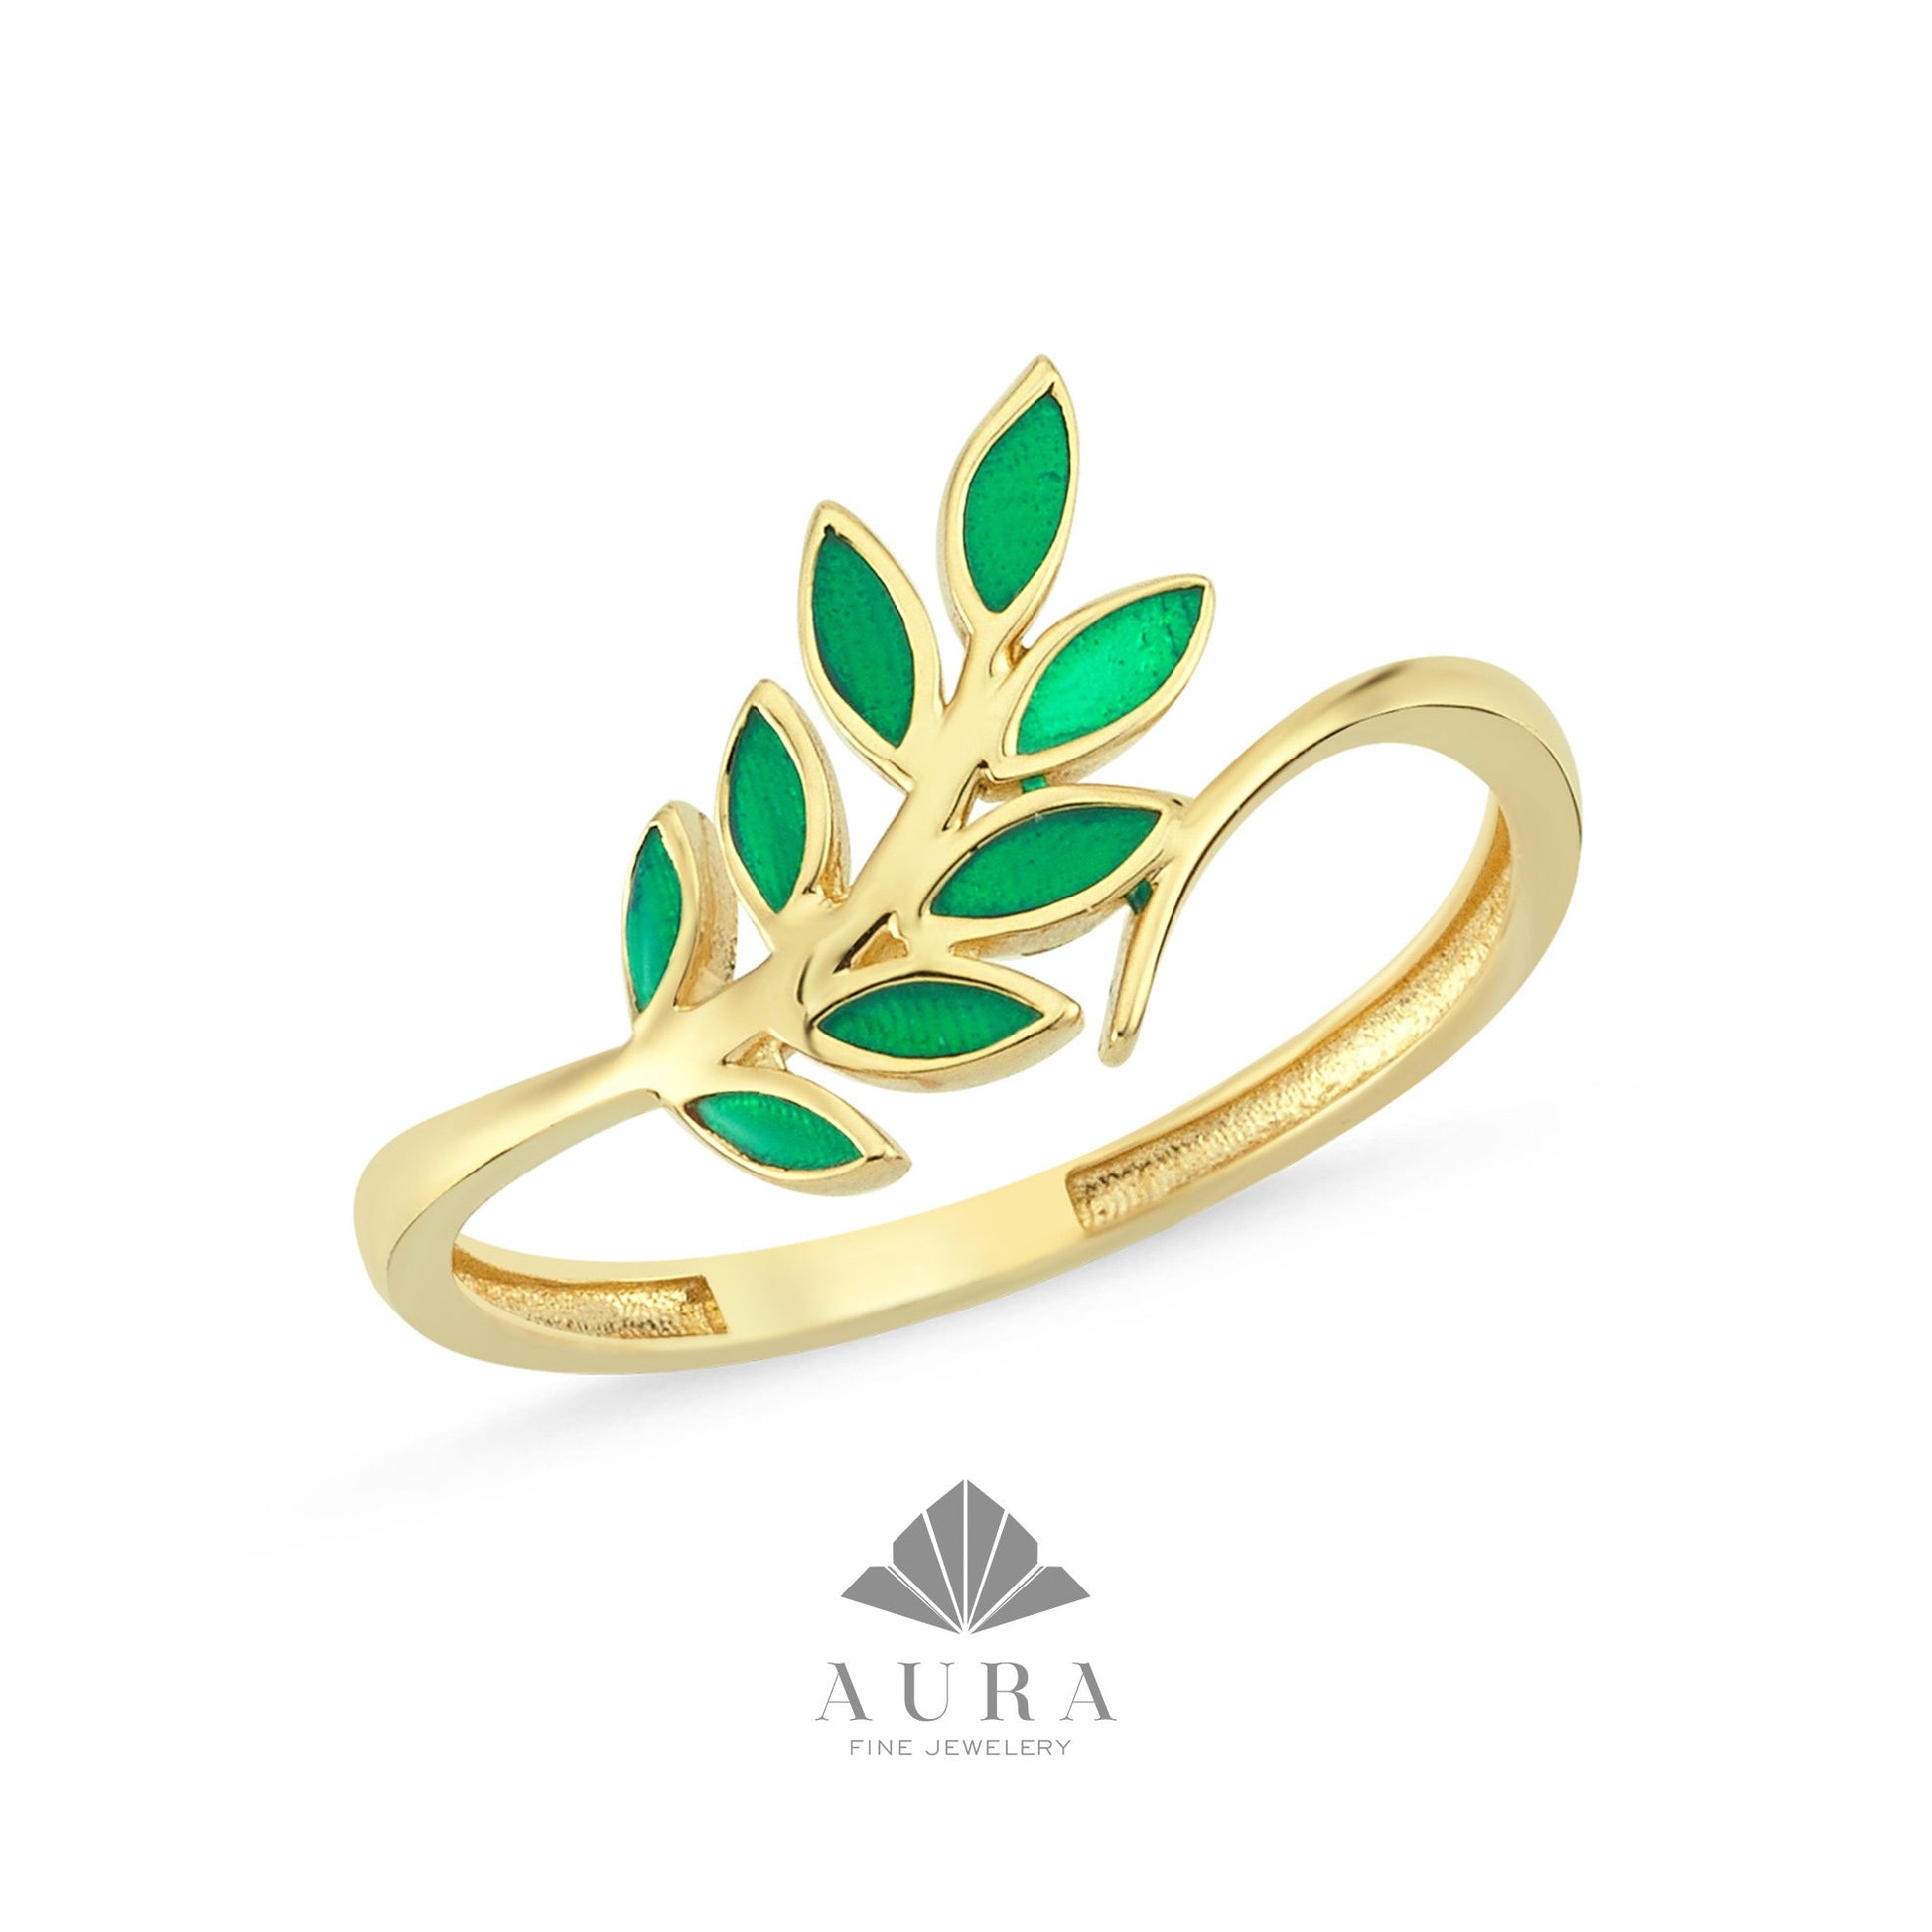 14K Gold Leaf Ring, Green Leaf Branch Ring, Stacking Gold Band, Vine Ring, Laurel Ring, Marquise Botanical Ring, Floral Band Ring